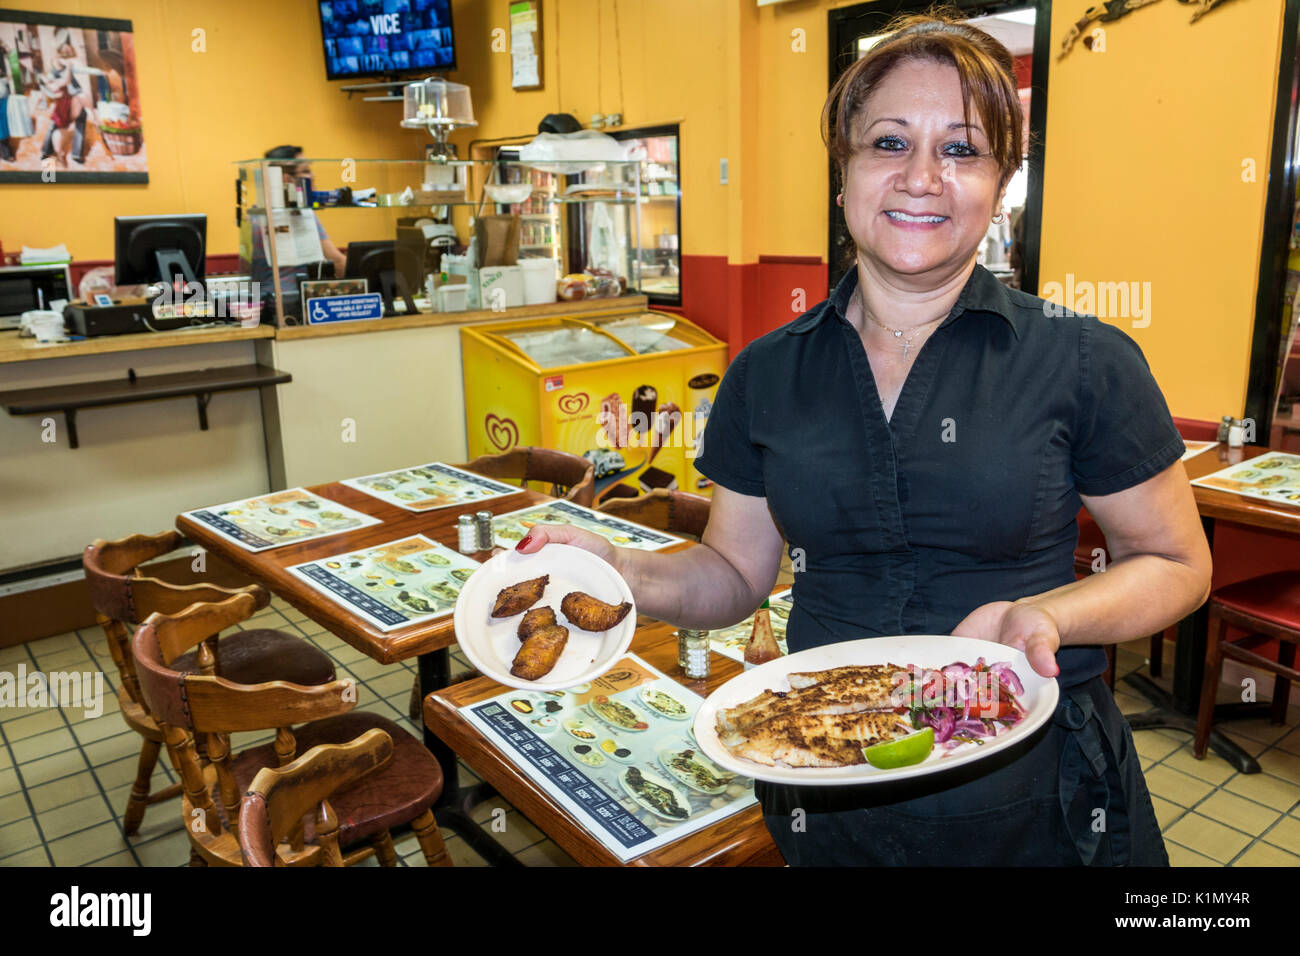 11 Photos - Miami, Florida - Food Delivery Services - Restaurant